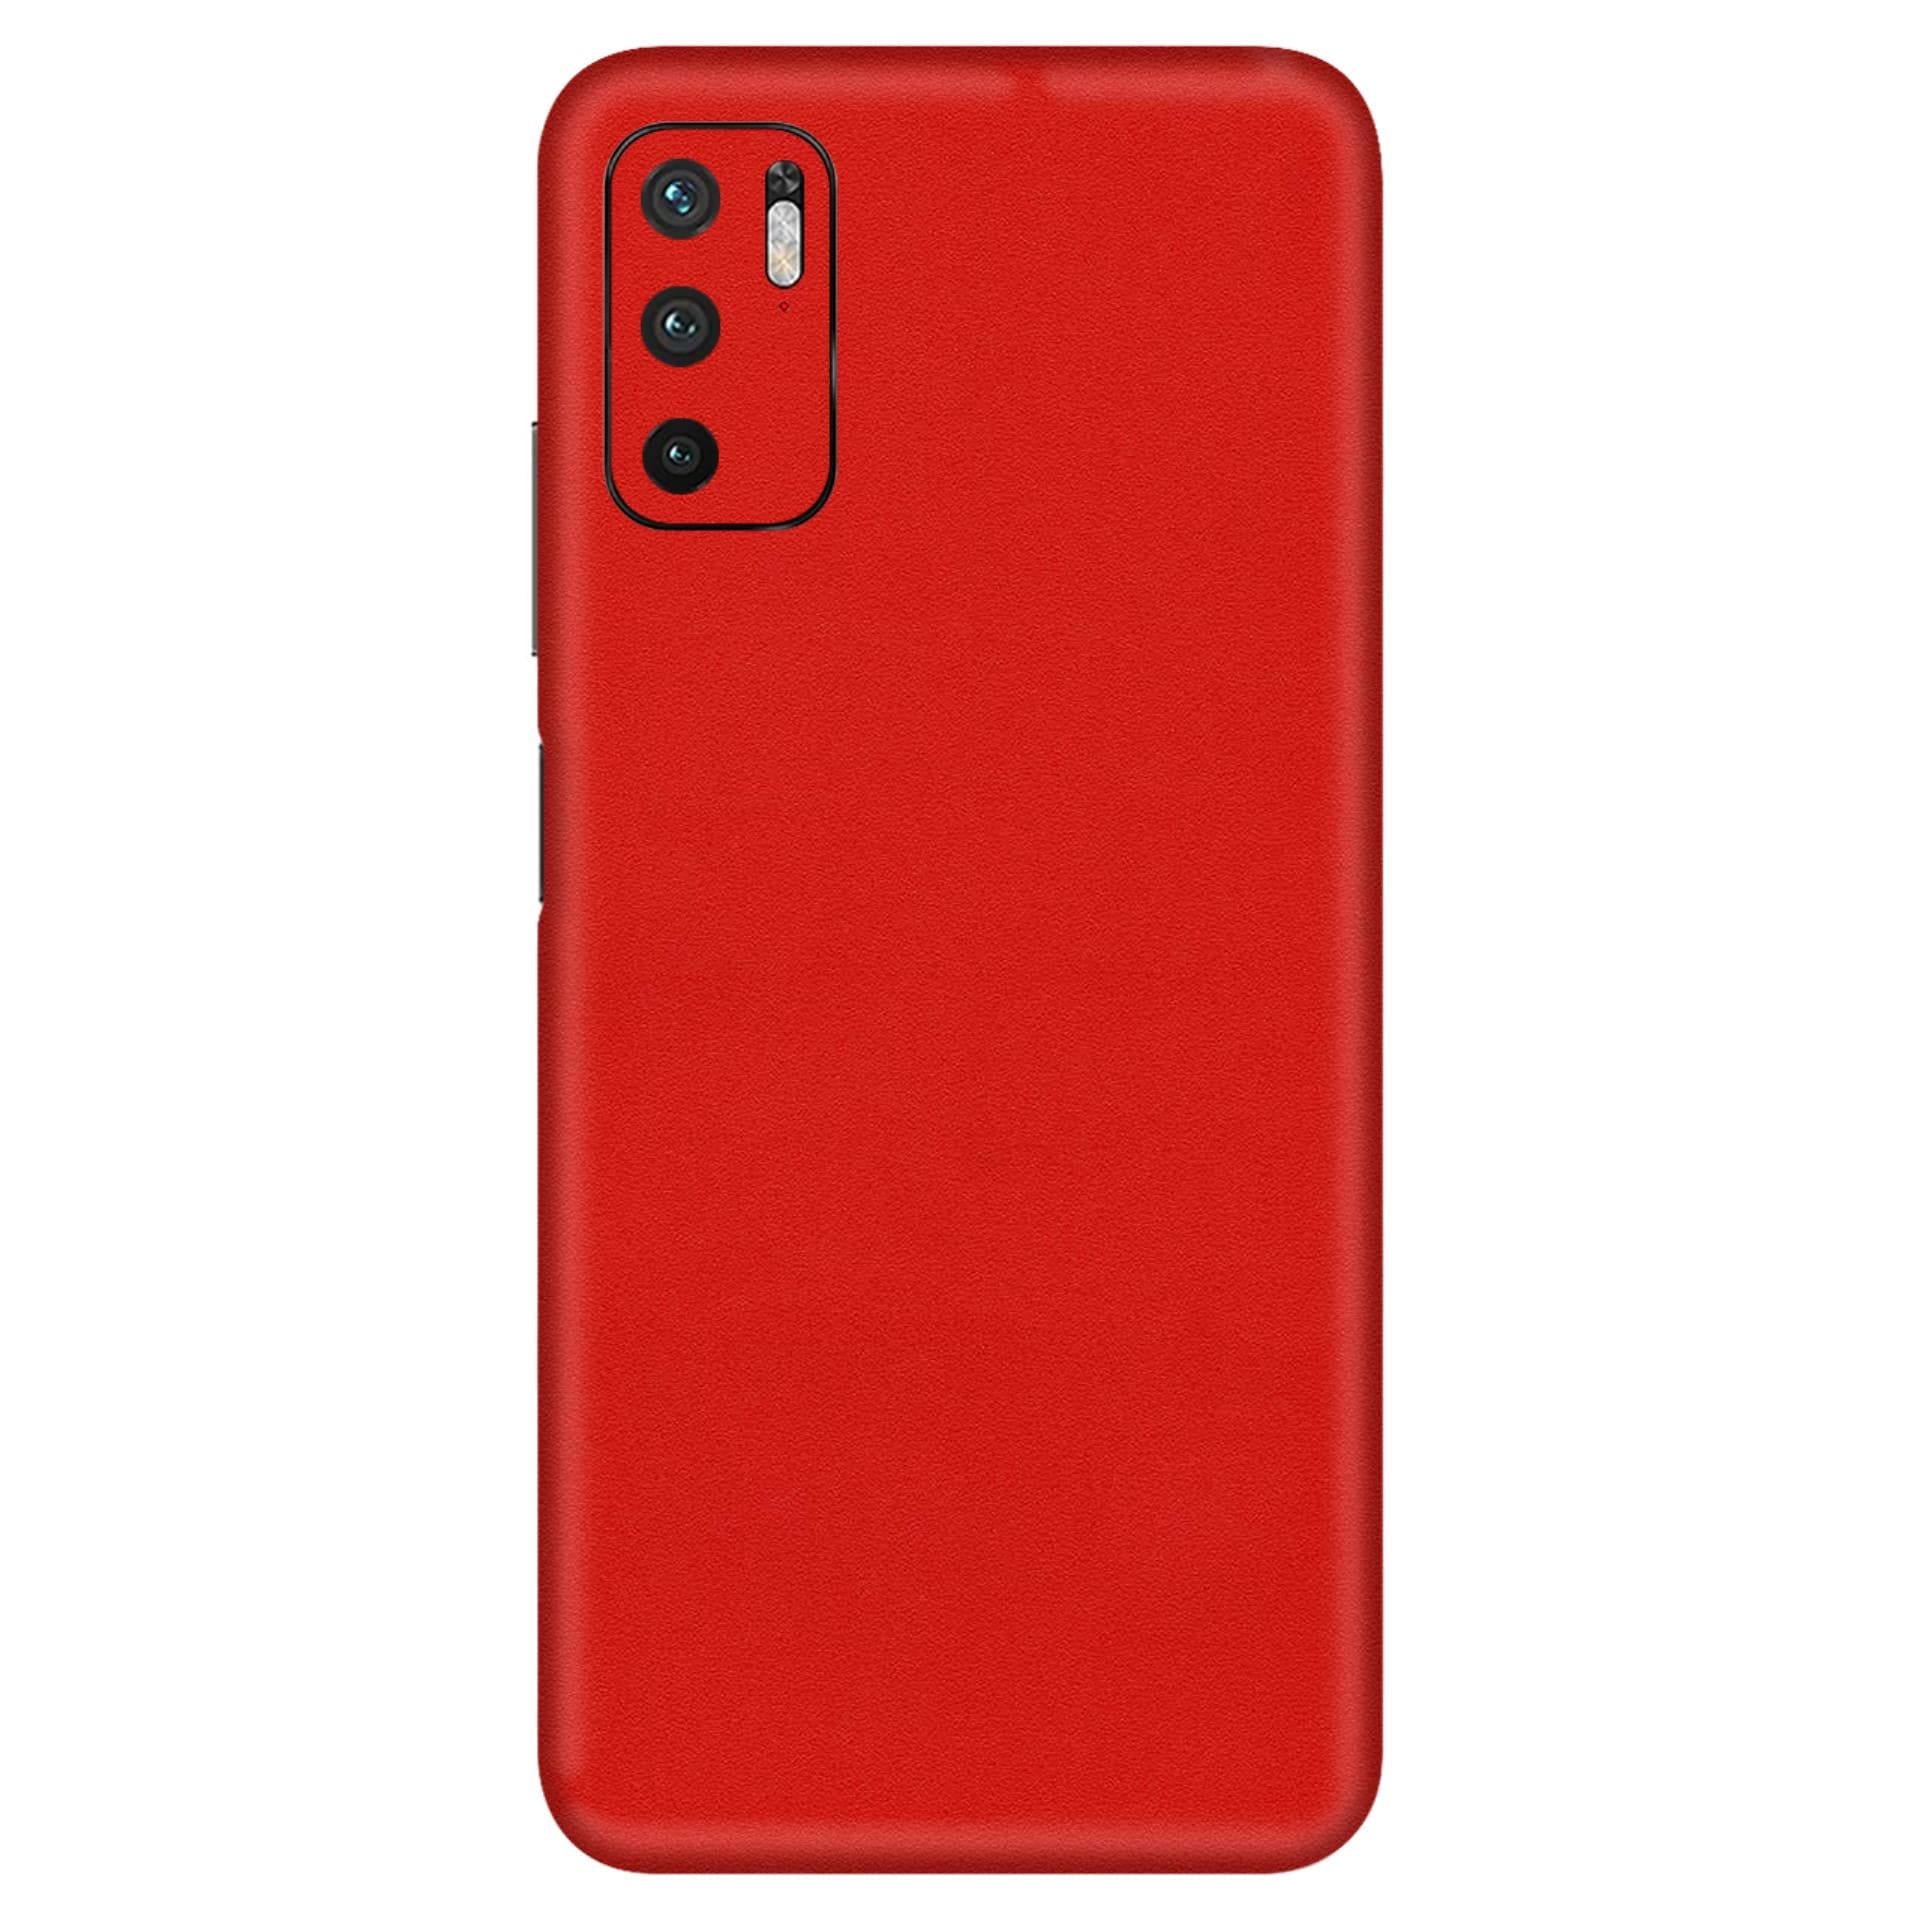 Redmi Note 10T Matte Red skins